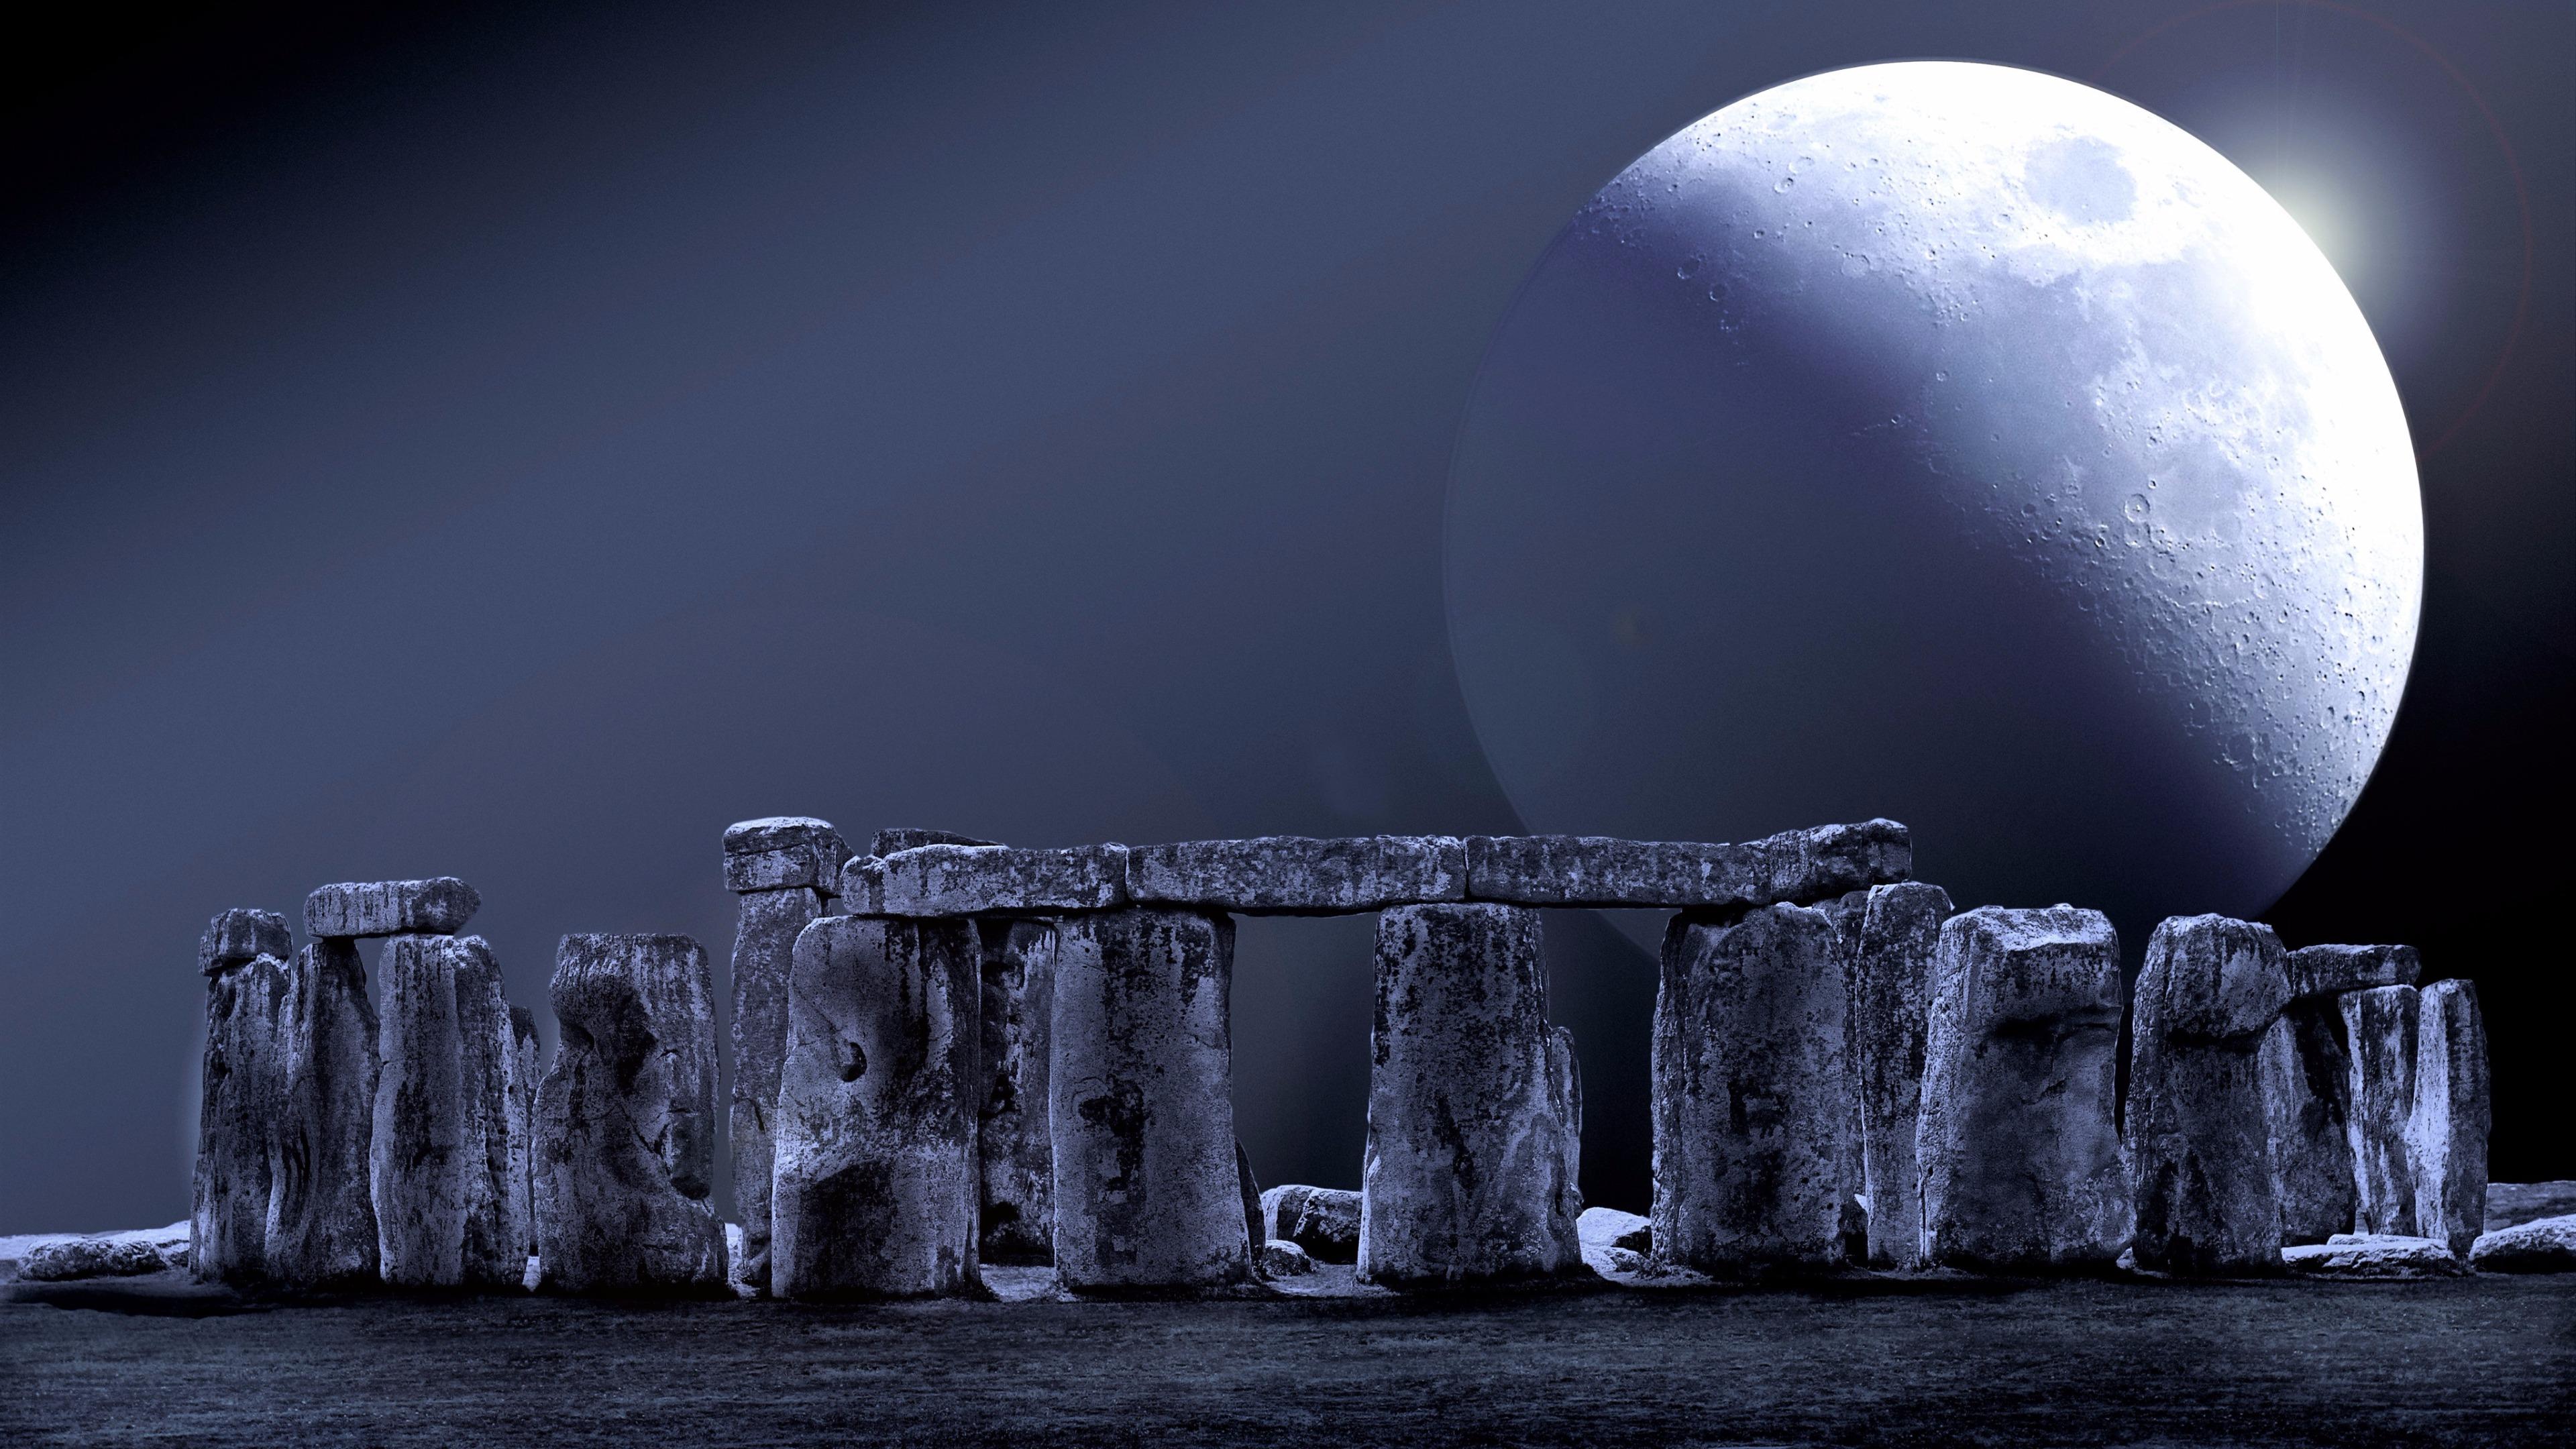 Stonehenge With An Enormous Full Moon 4K UltraHD Wallpaper